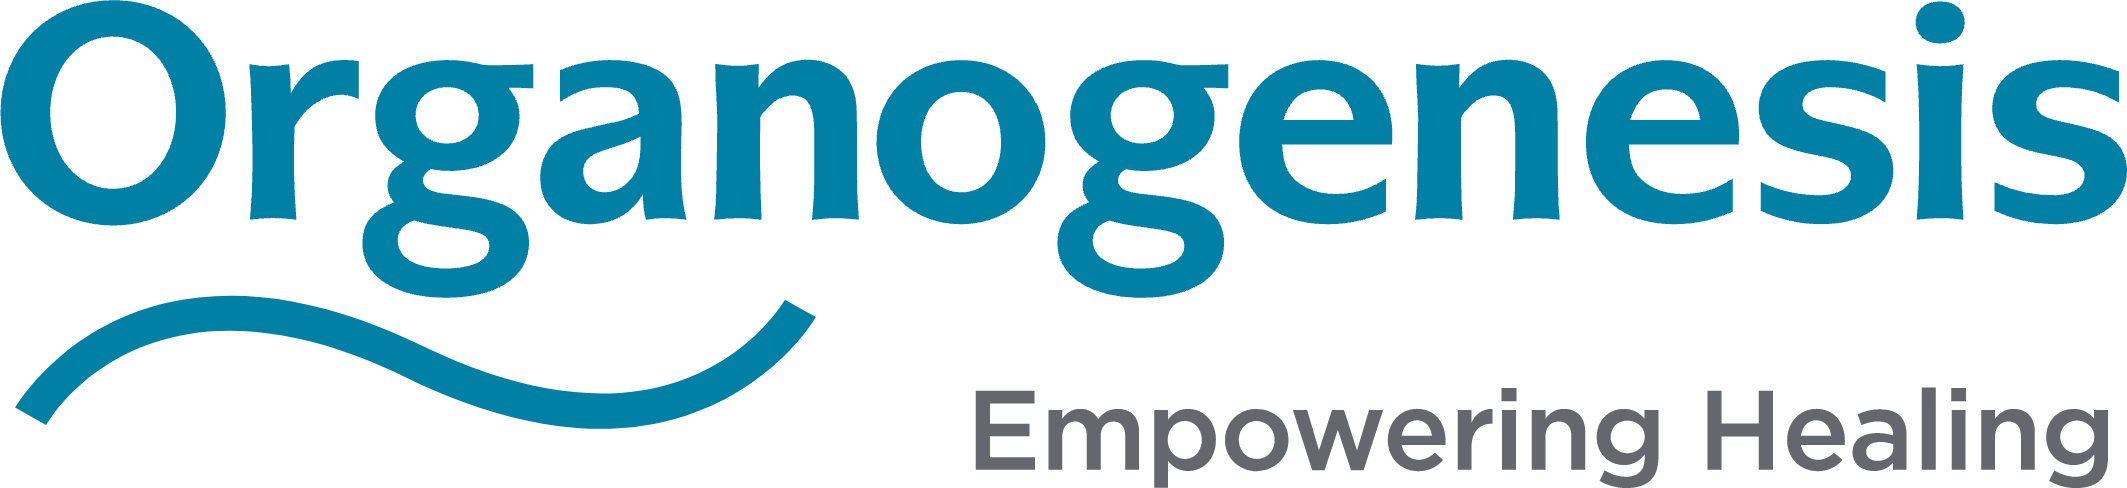 Organogenesis logo large (transparent PNG)